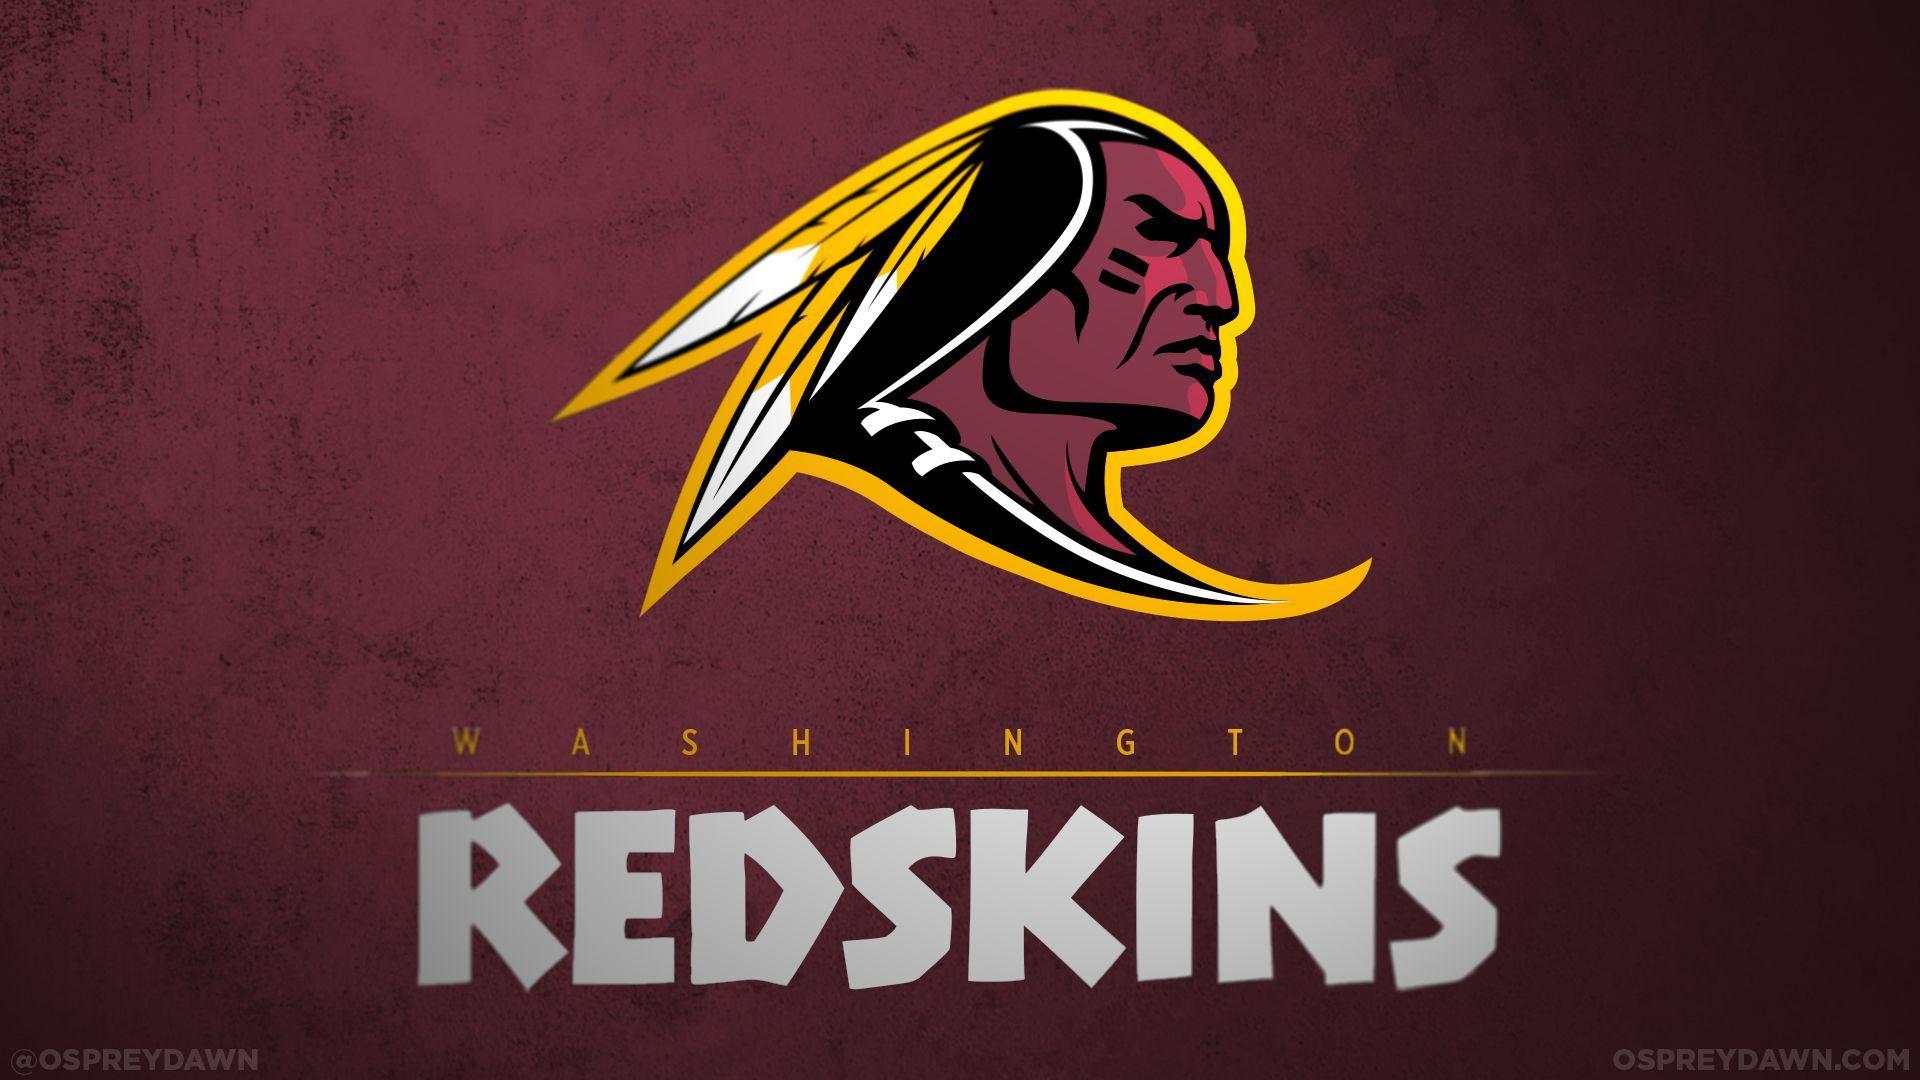 Redskins New Logo - Washington Redskins Logo Change | Washington Redskins Name Change ...